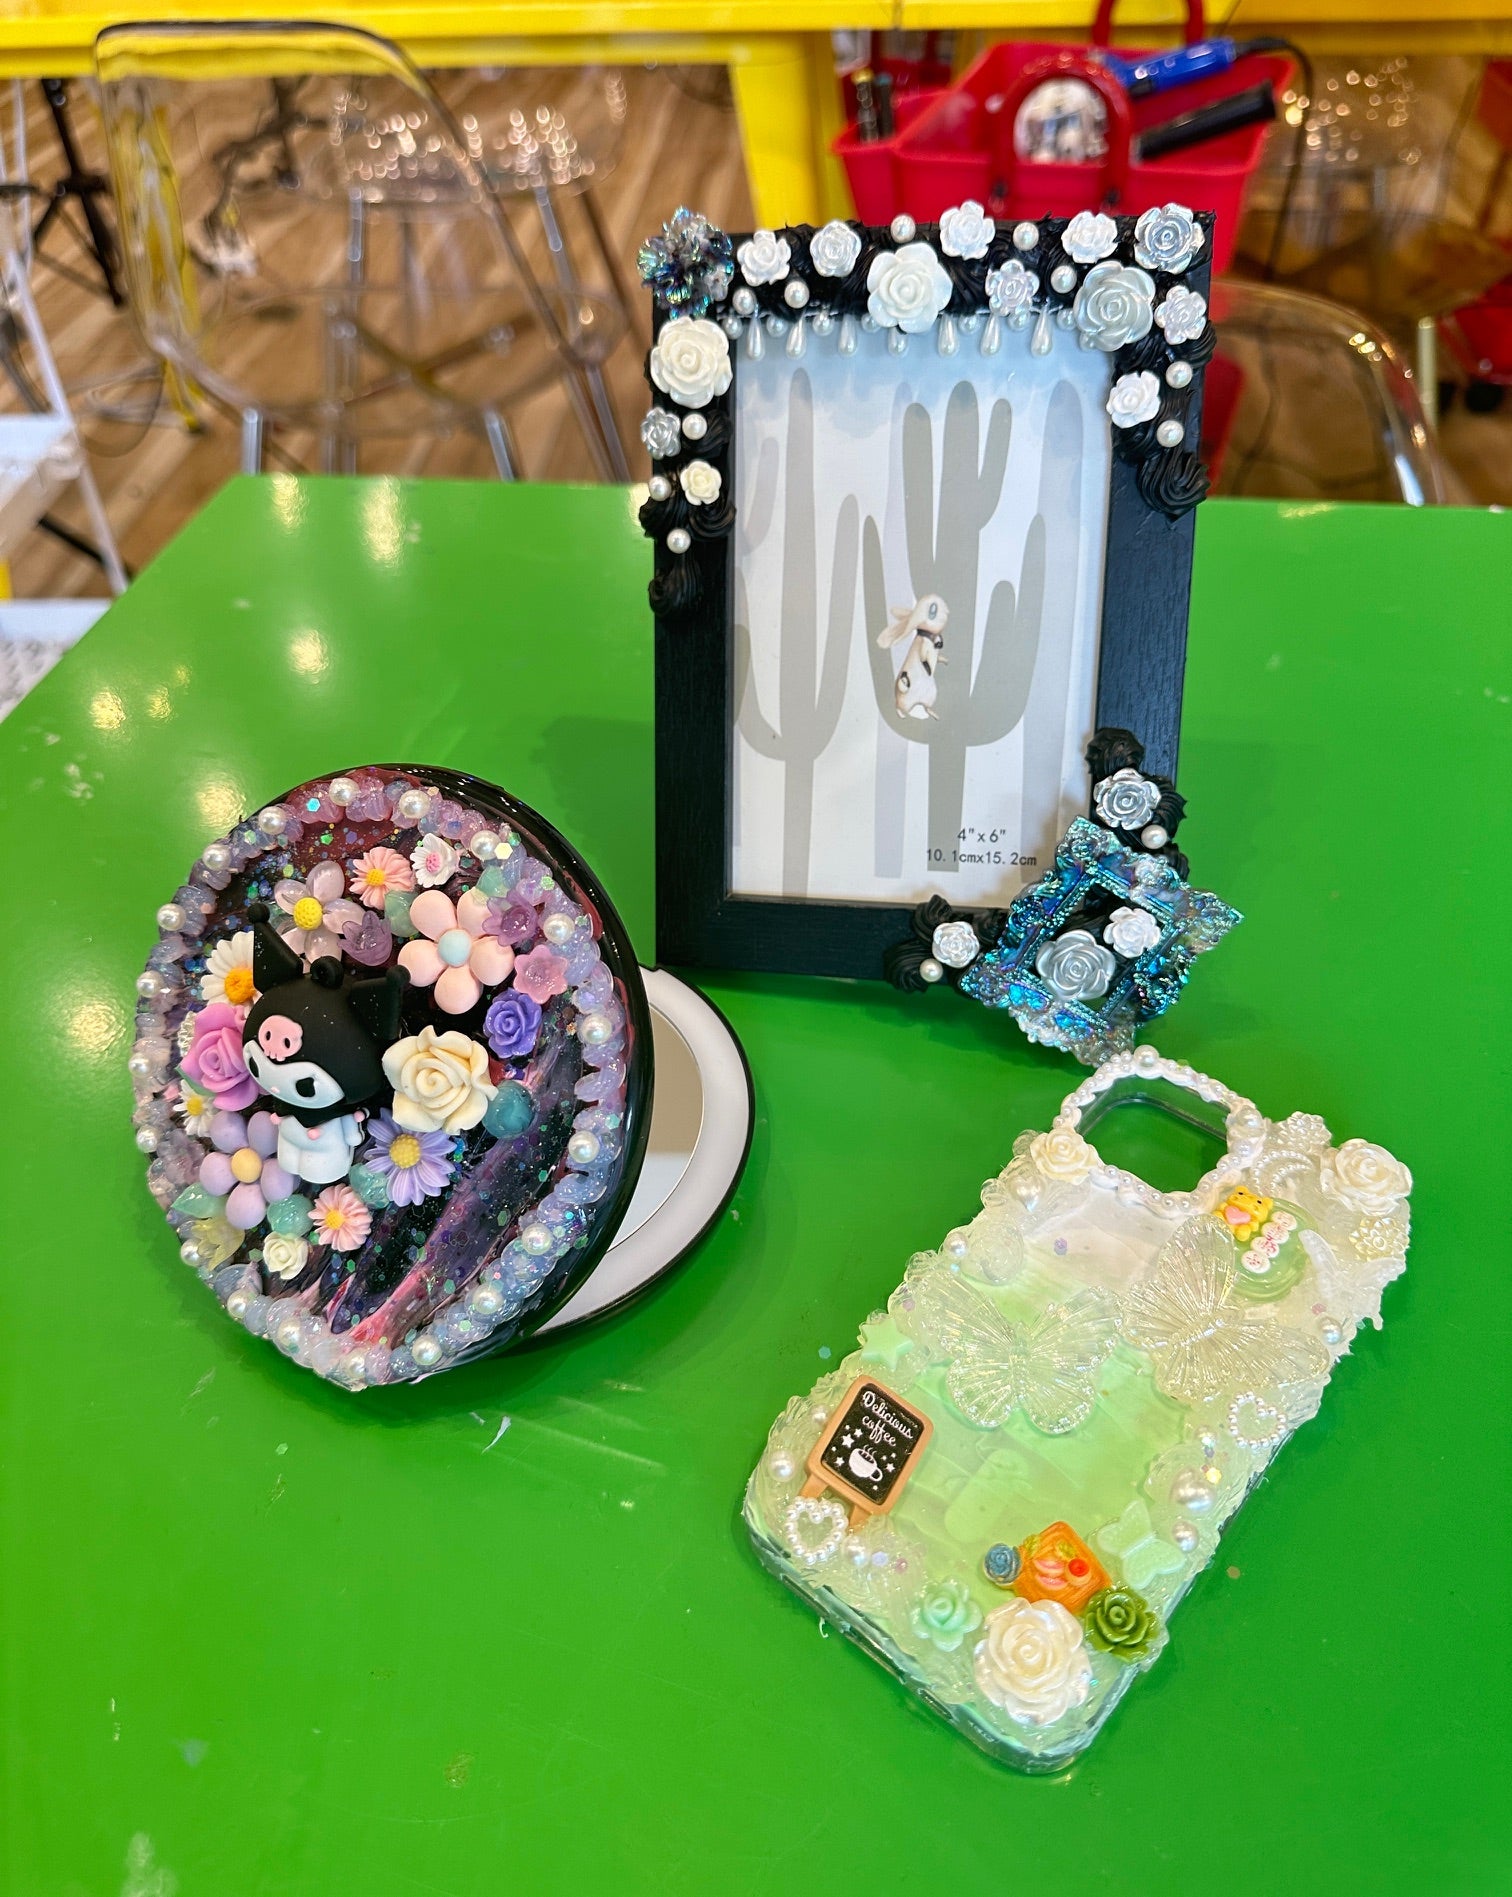 🧁【Whipped Cream Glue Phone Case DIY & Polymer Clay Miniature